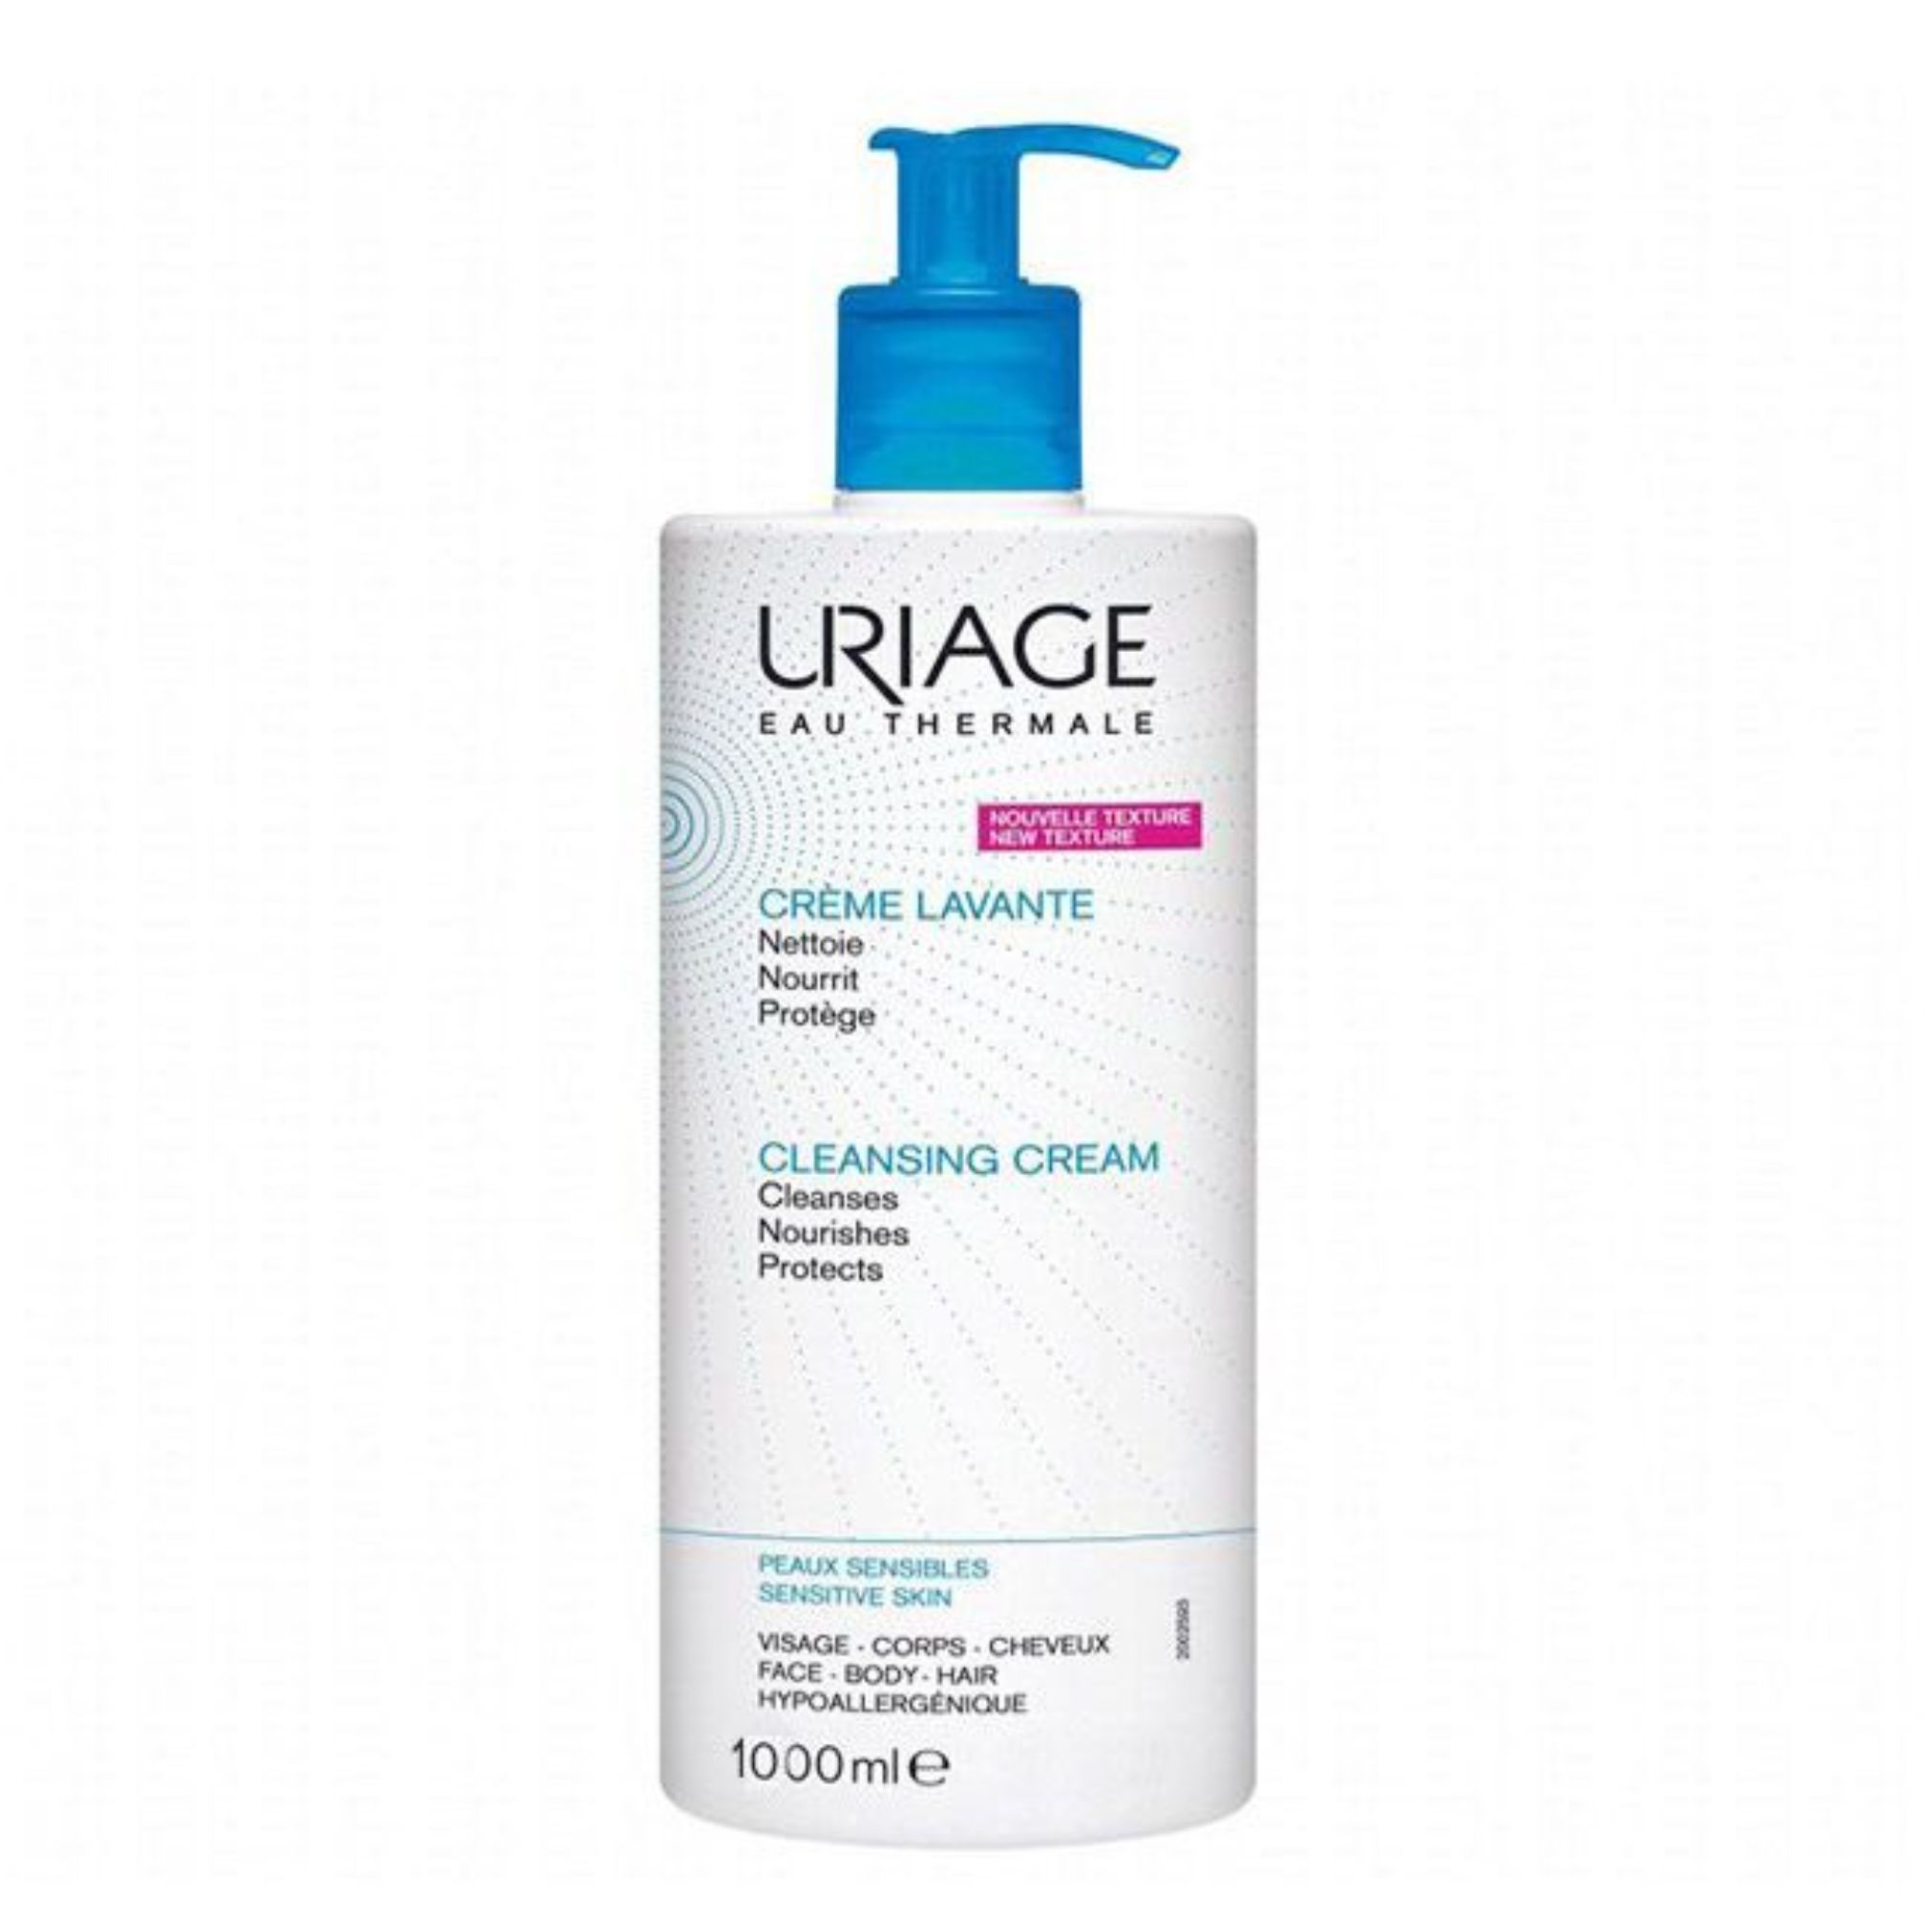 Uriage Cleansing Cream 1000ml